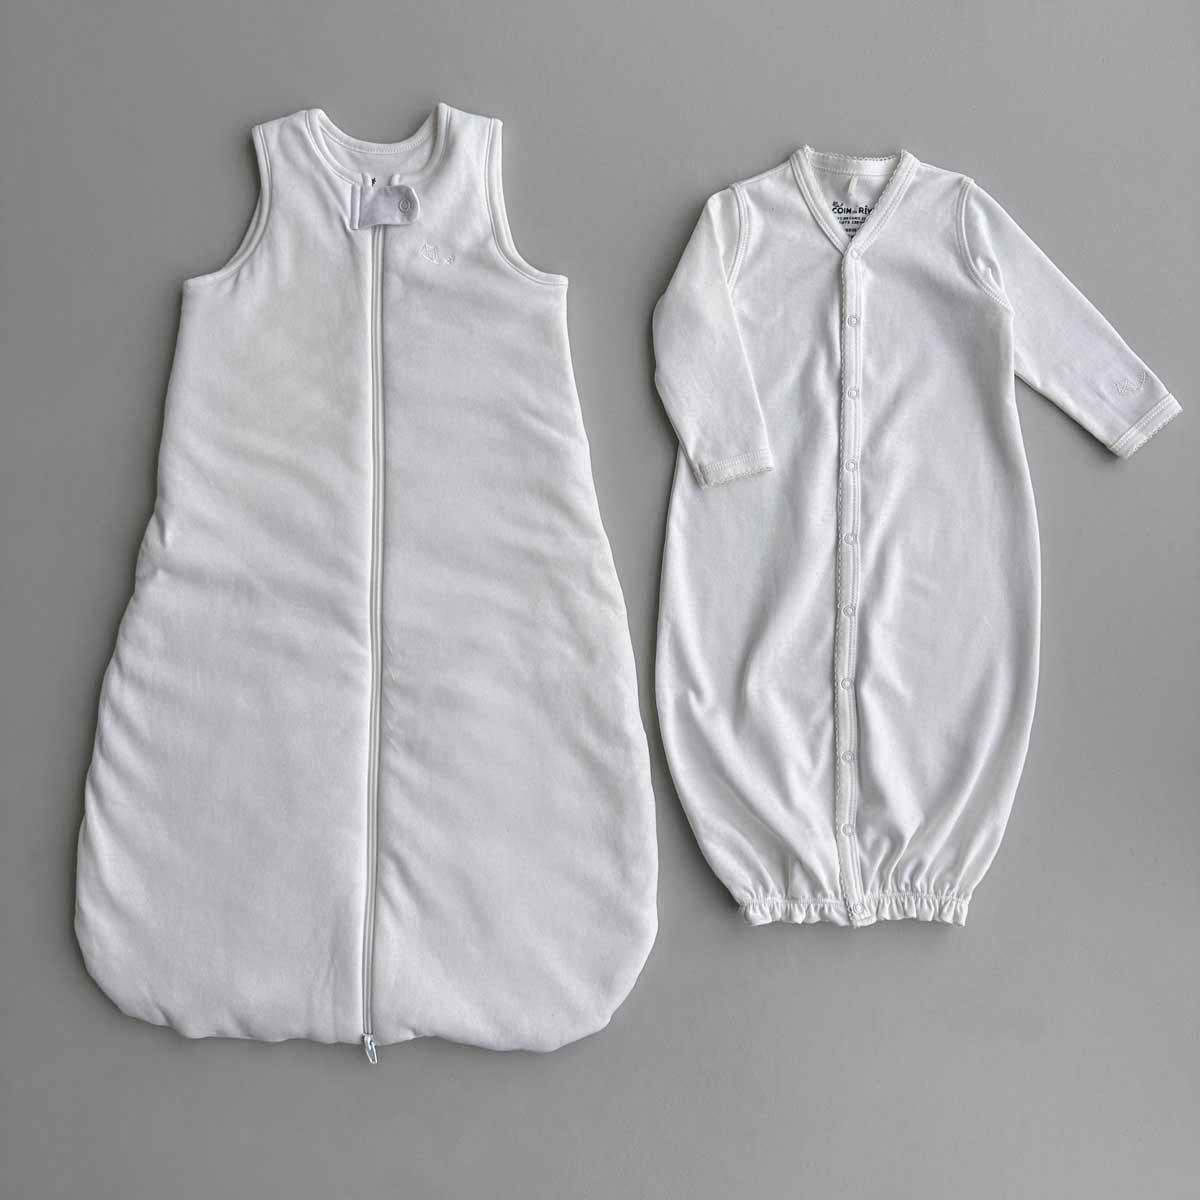 Krämvit Sovpåse (sleep sack) bredvid krämvit sovpåse (sleeping gown) på plan grå yta.